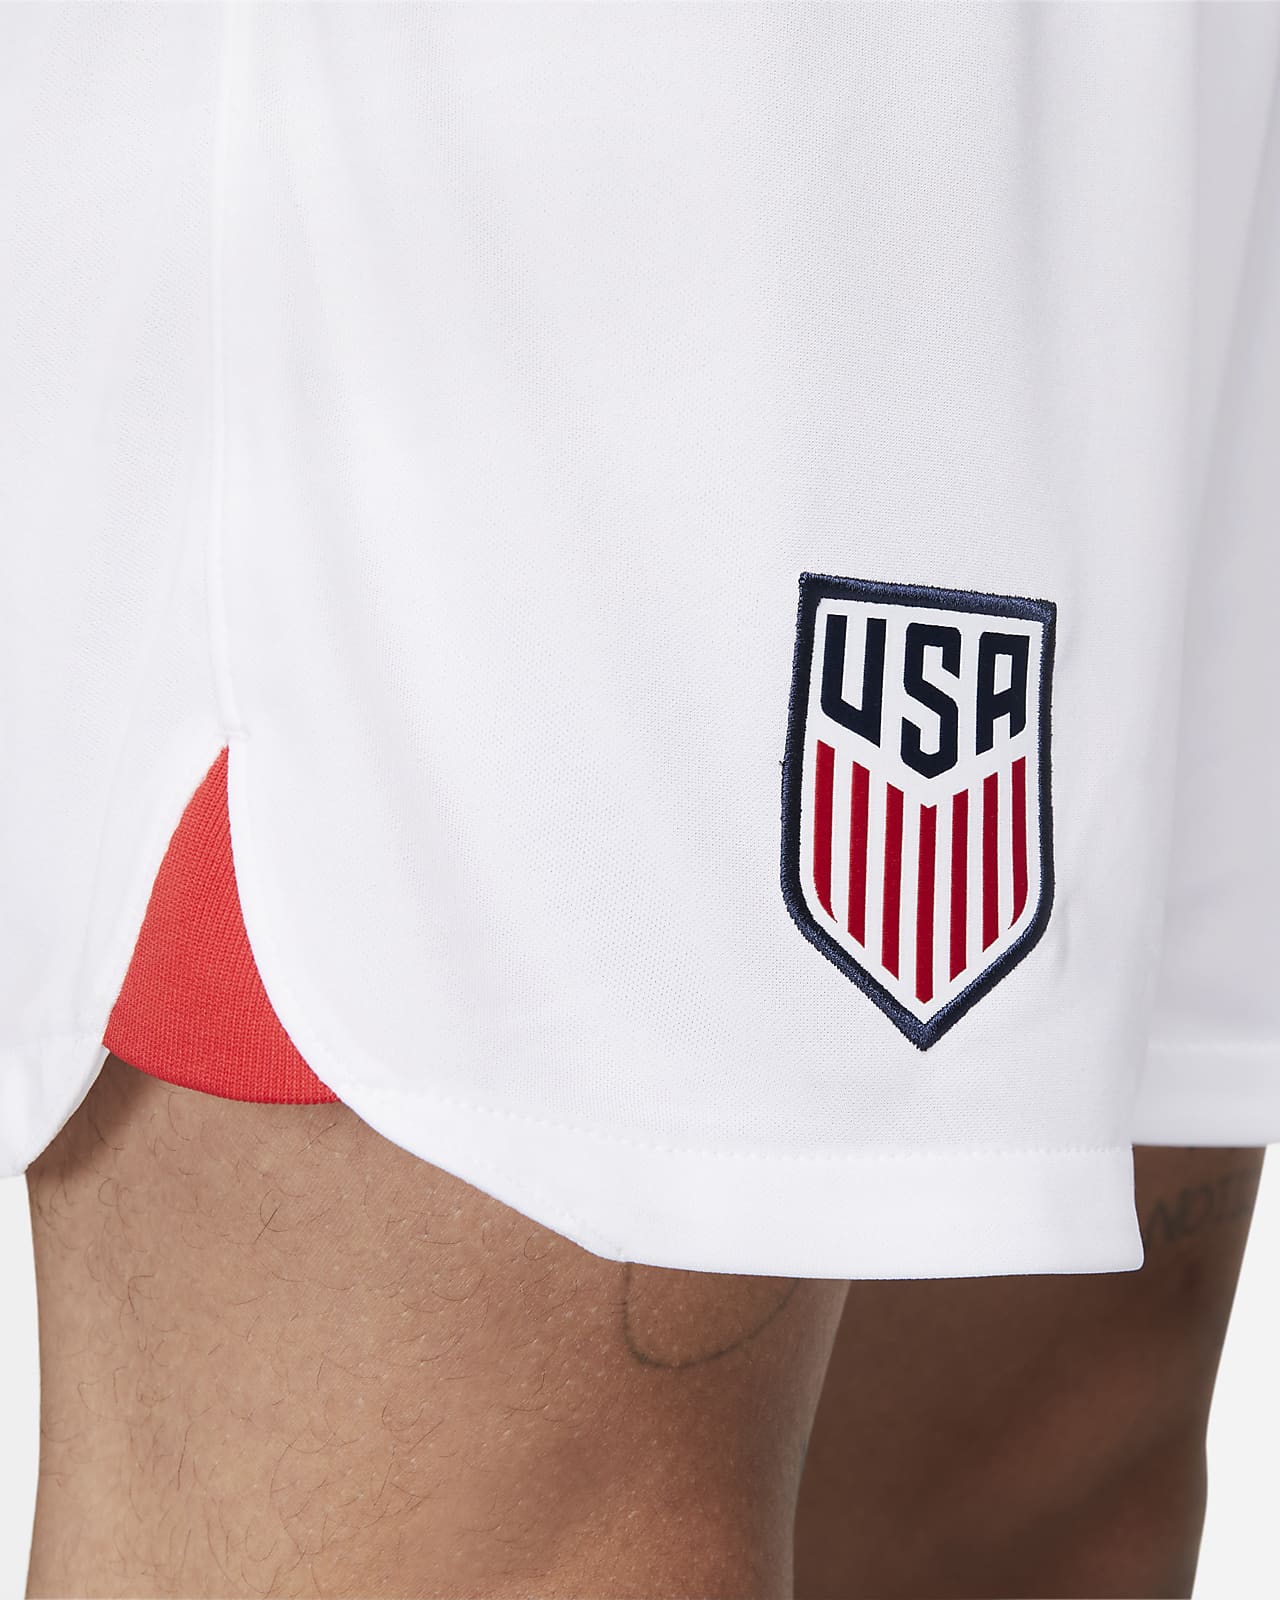 U.S. 2022/23 Stadium Goalkeeper Men's Nike Dri-FIT Soccer Jersey.